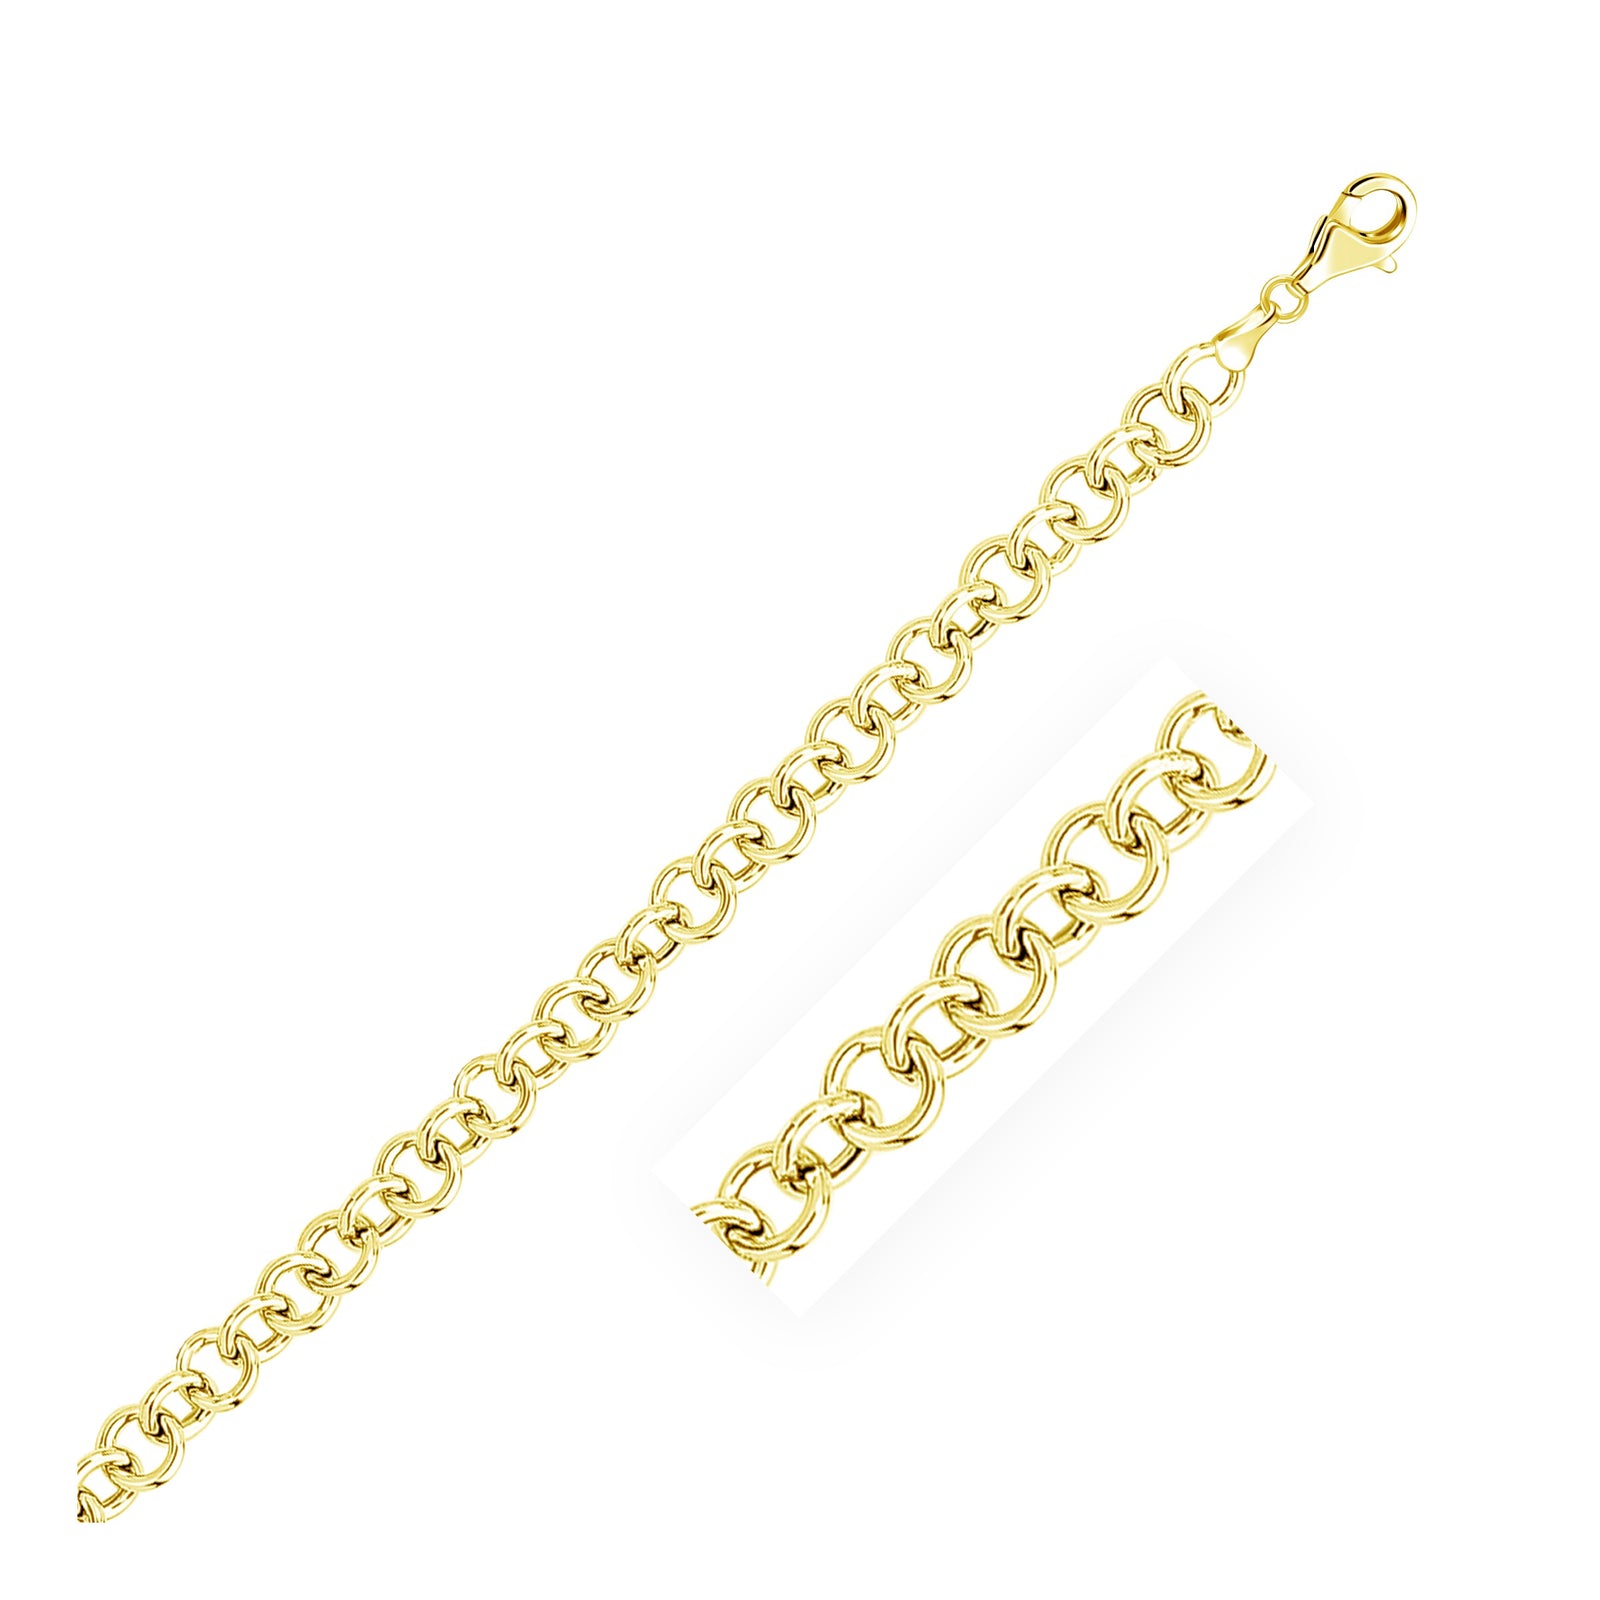 7.0 mm 14k Yellow Gold Link Charm Bracelet